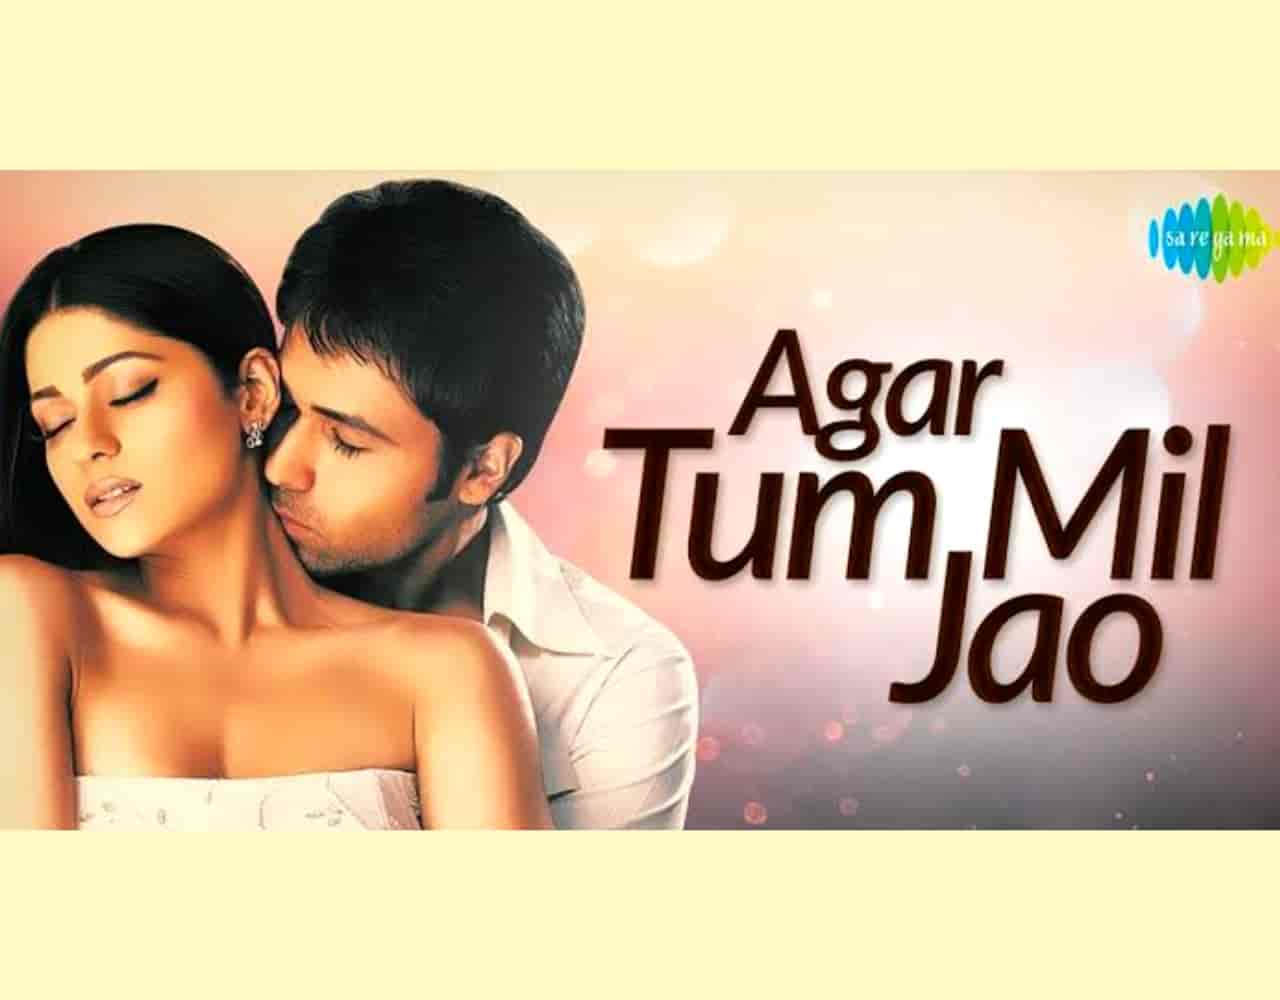 Agar Tum mil jao Hindi Romantic Song Lyrics, Sung By Shreya Ghoshal.